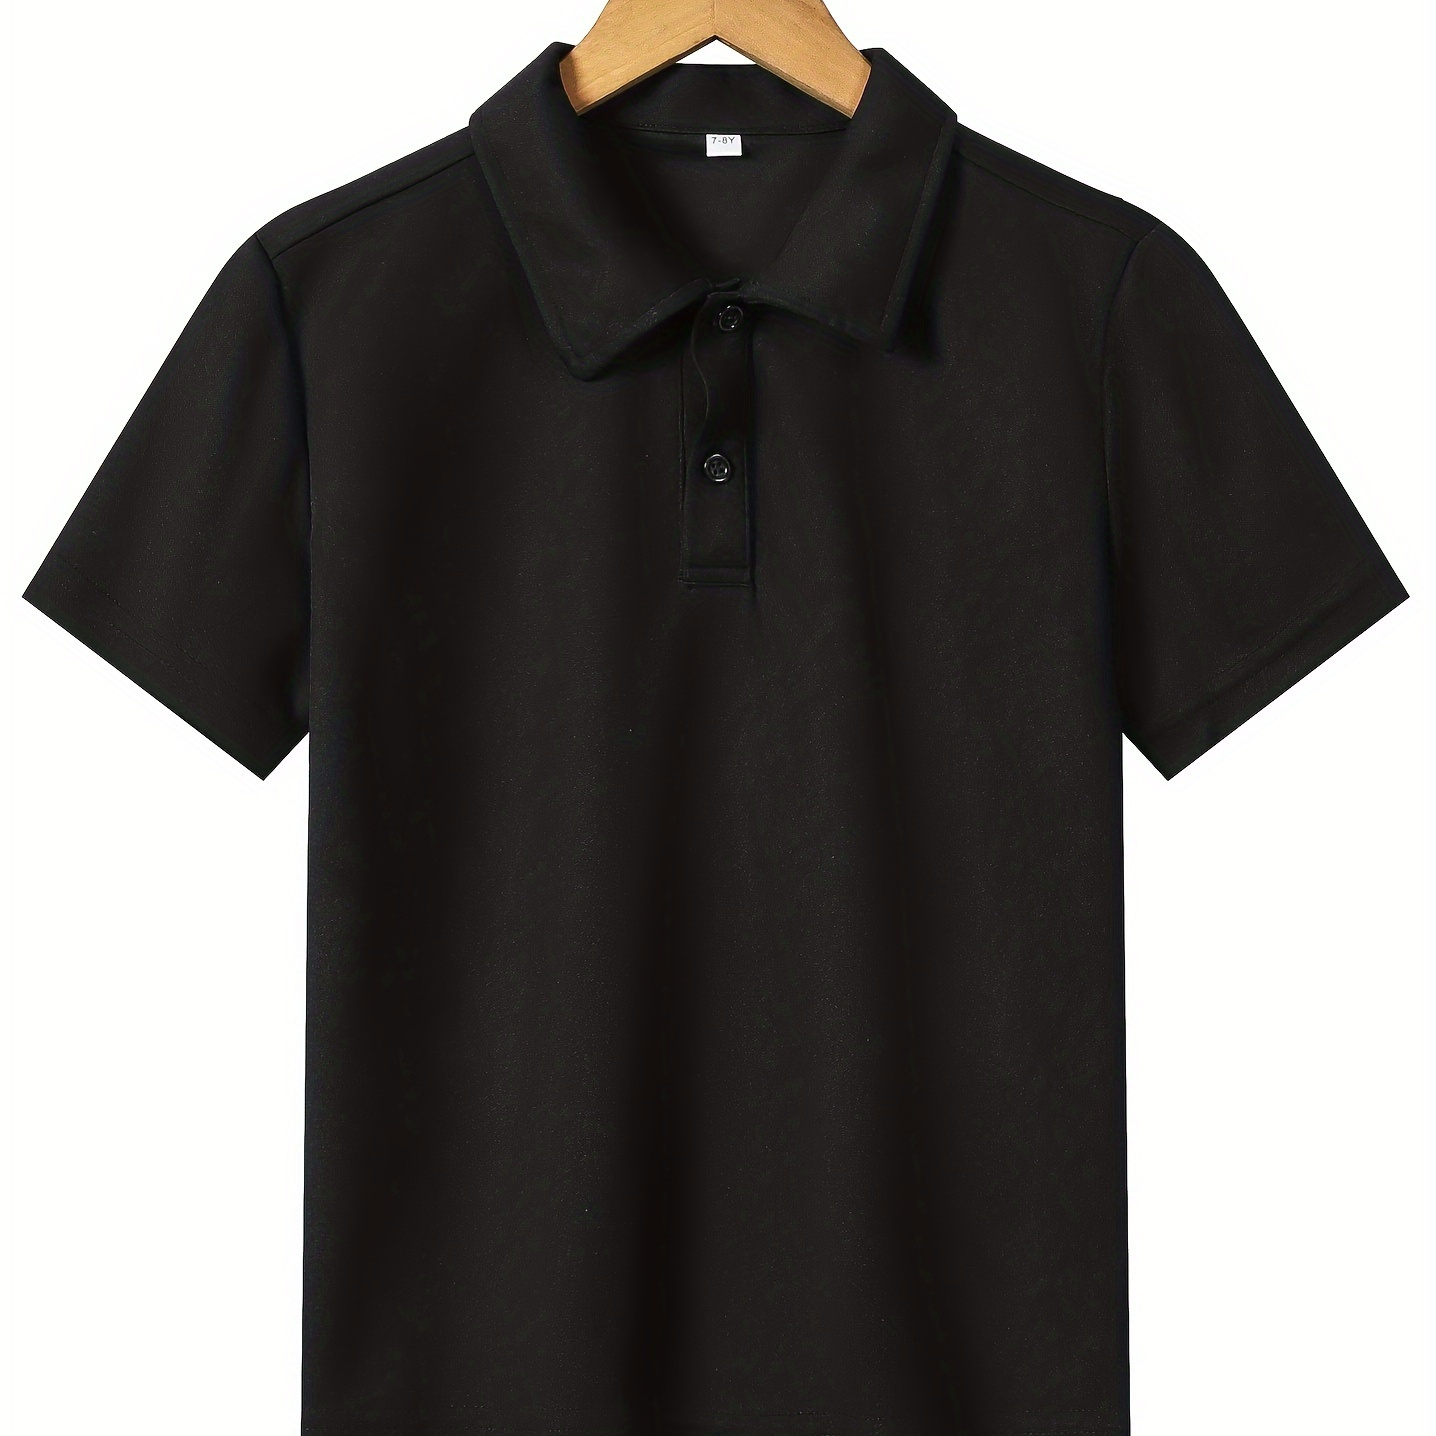 

Boy's Solid Preppy Lapel Shirt, Casual Comfortable Short Sleeve Breathable Summer Top Shirt, School Uniform, Daily Wear